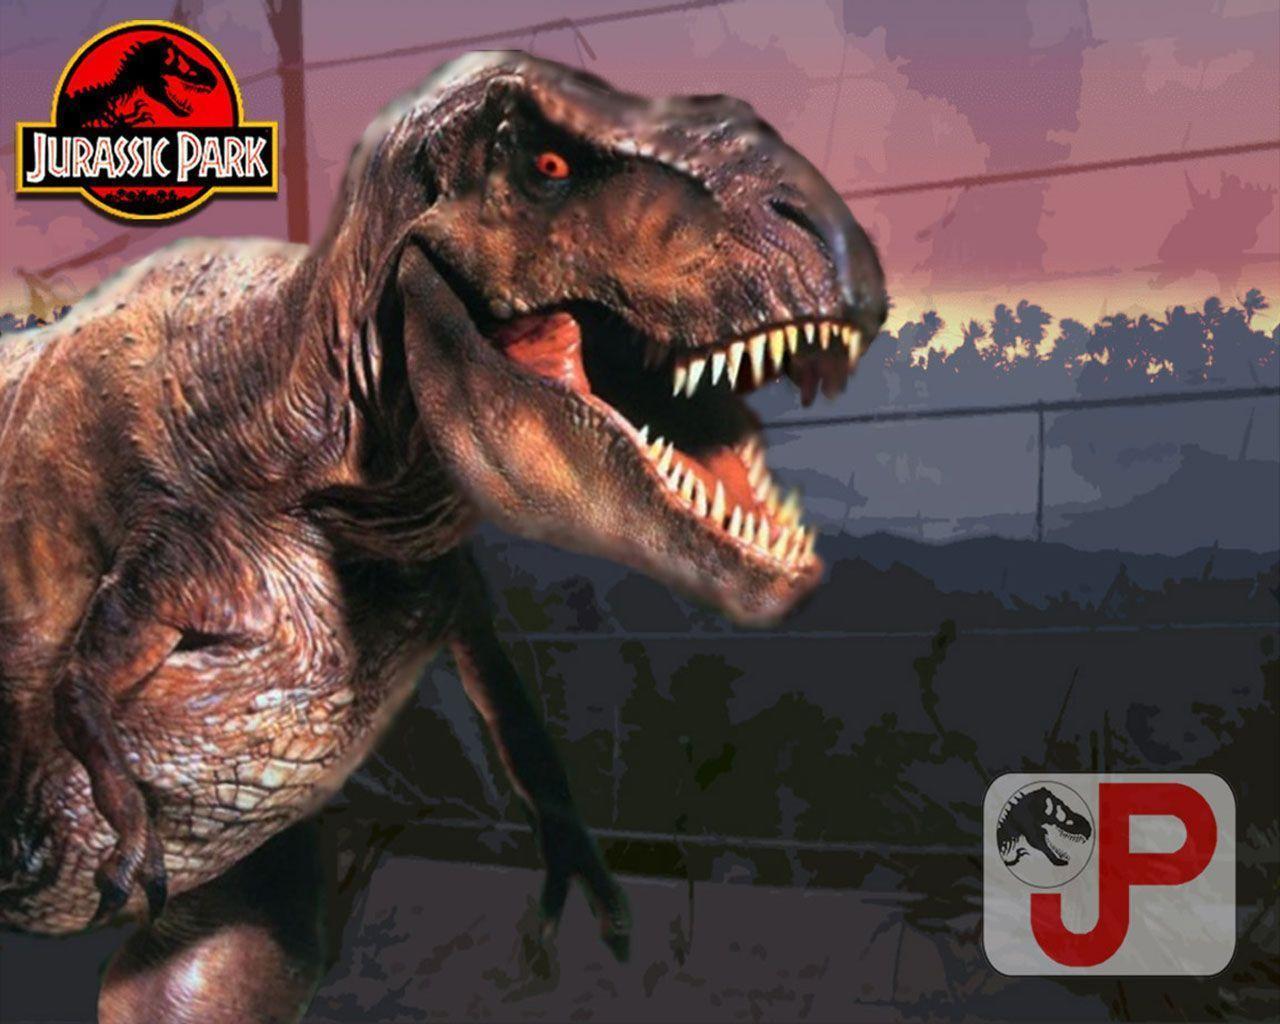 Appealing Jurassic Park Wallpaper 1280x1024PX Jurassic Park